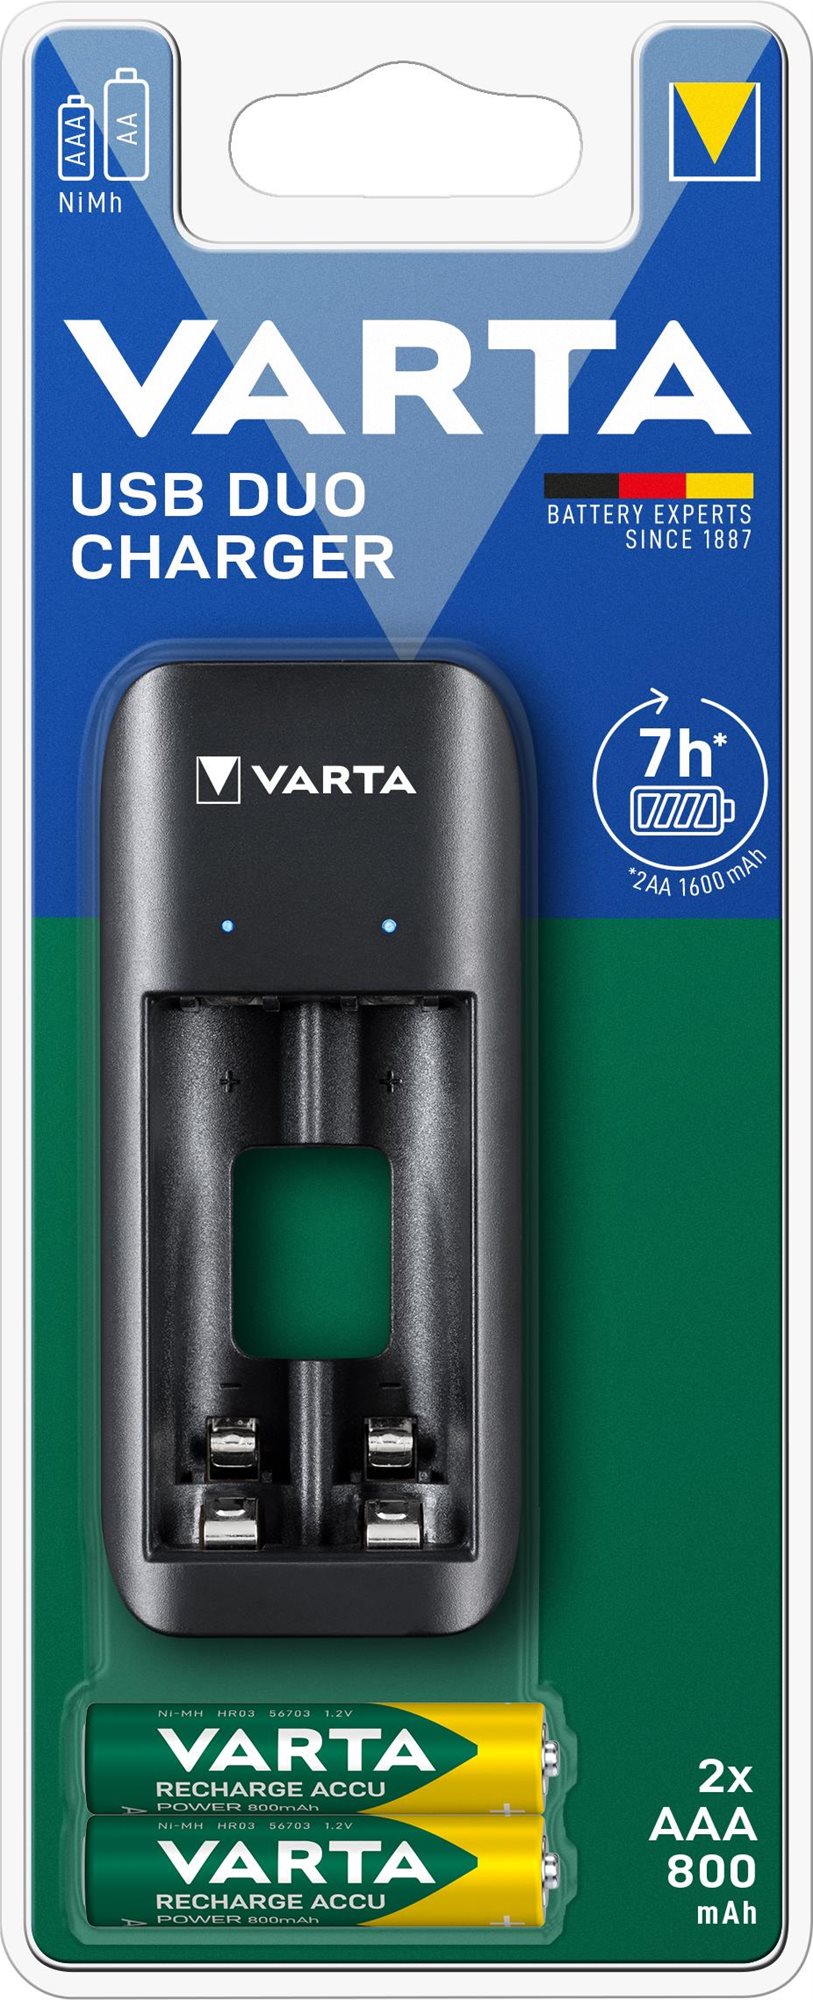 VARTA Duo USB Charger Töltő + 2 AAA 800 mAh R2U